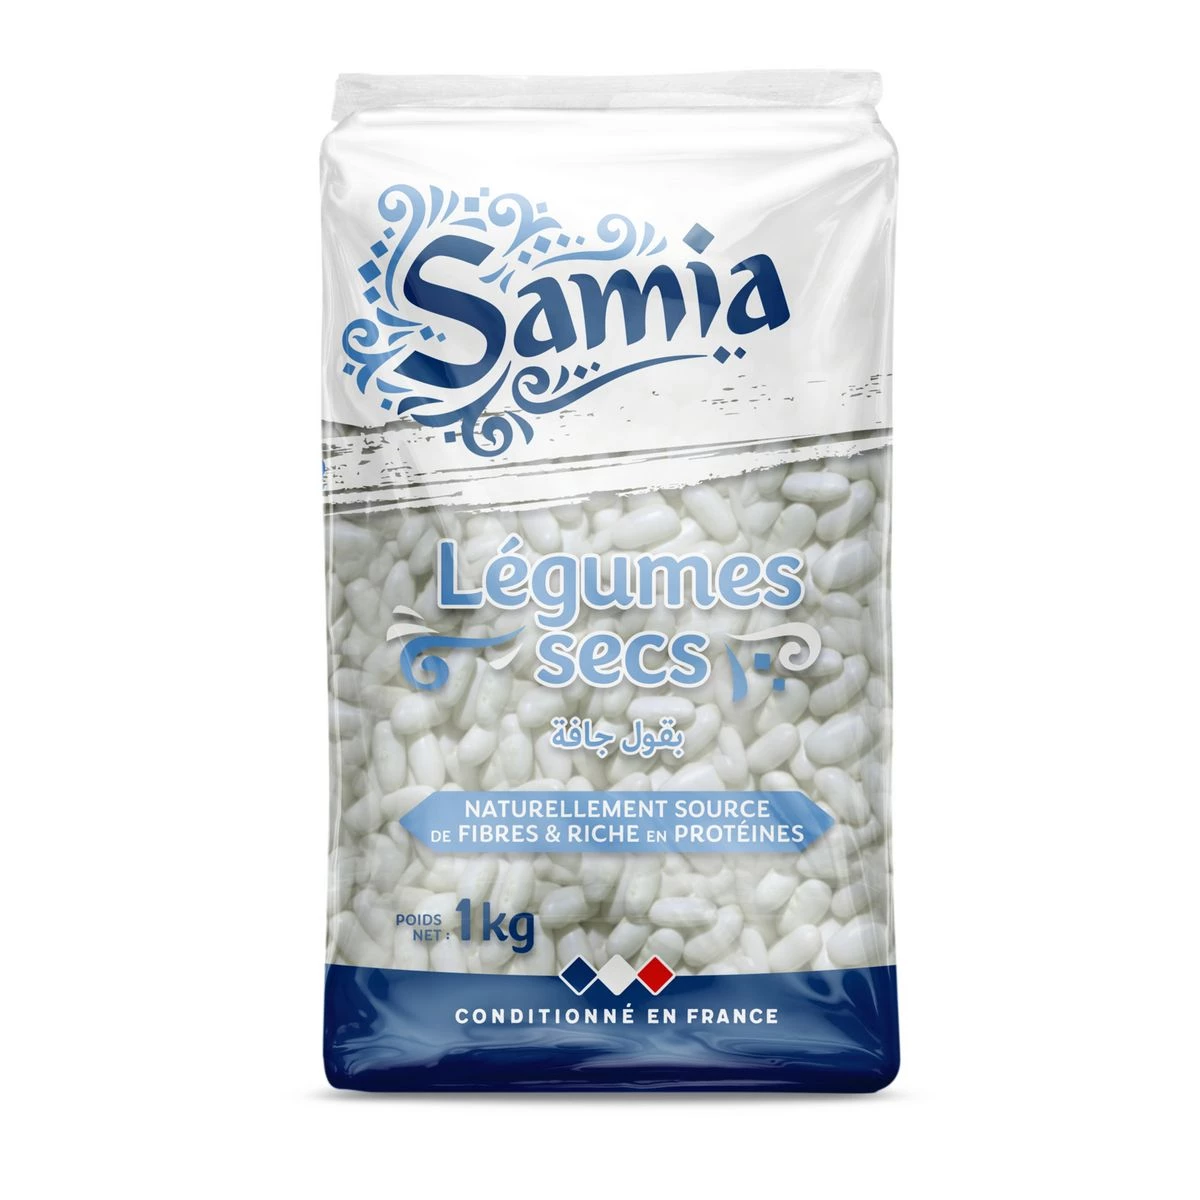 Lingote Samia Blanco de 1kg